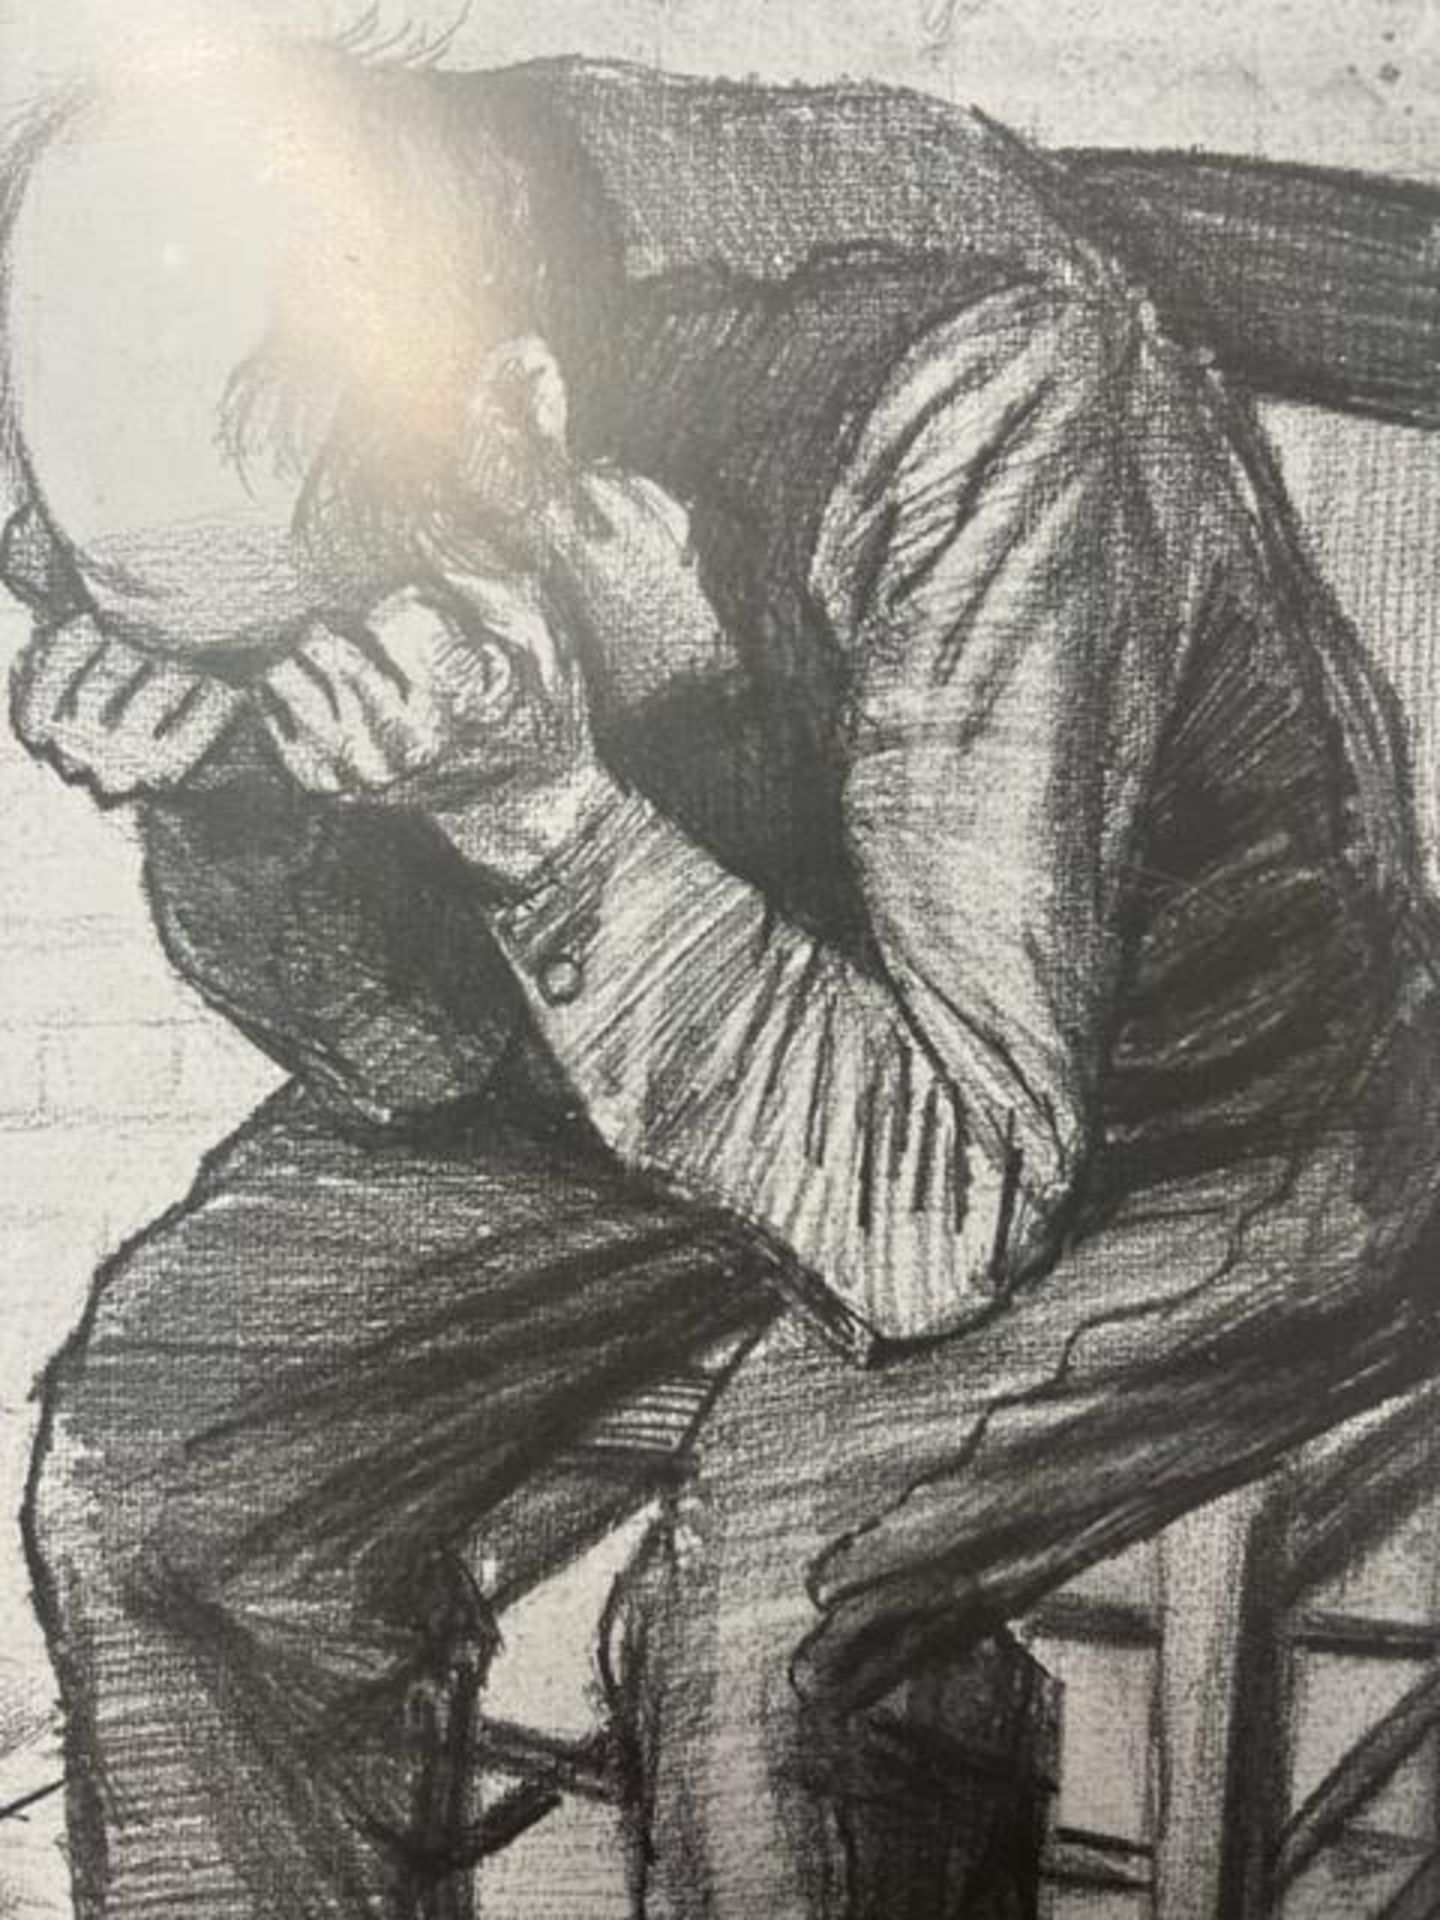 Vincent van Gogh "Old Man in Grief" Print. - Image 2 of 6